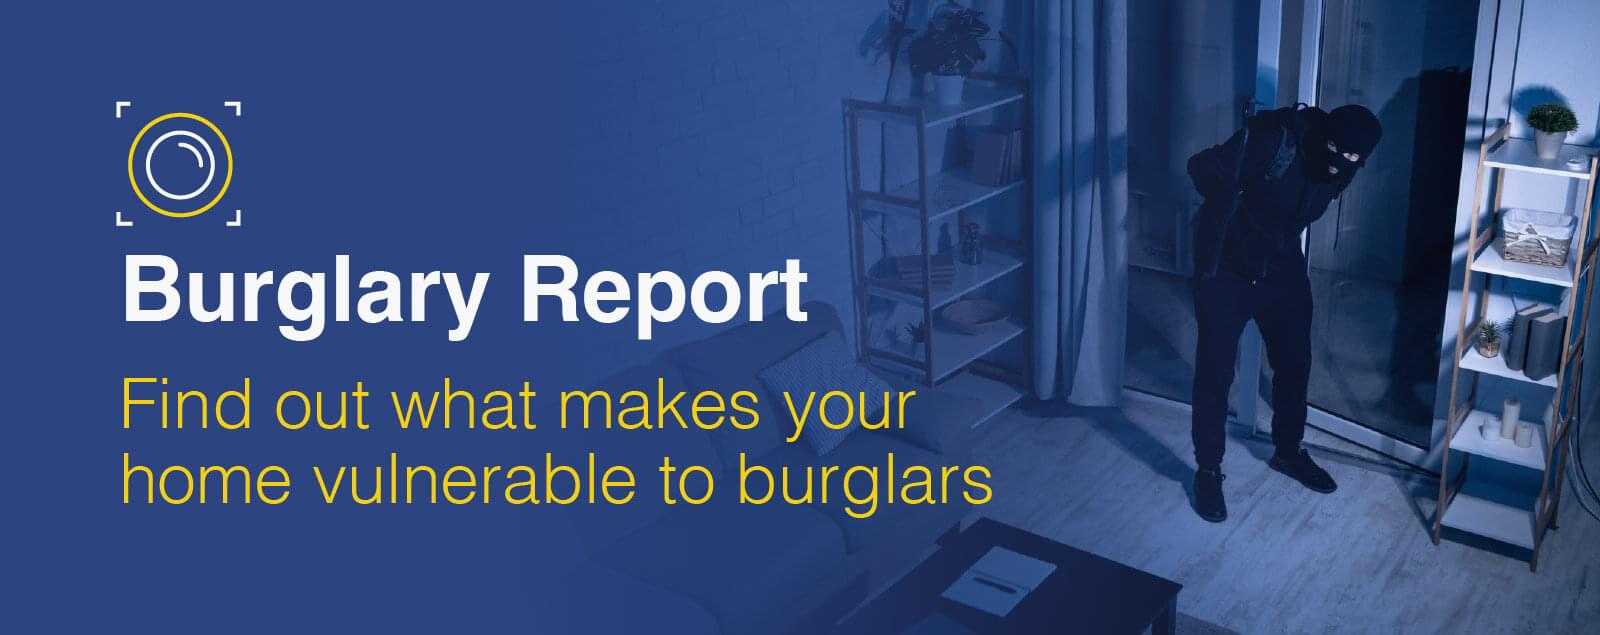 Burglary report header with home intruder in background